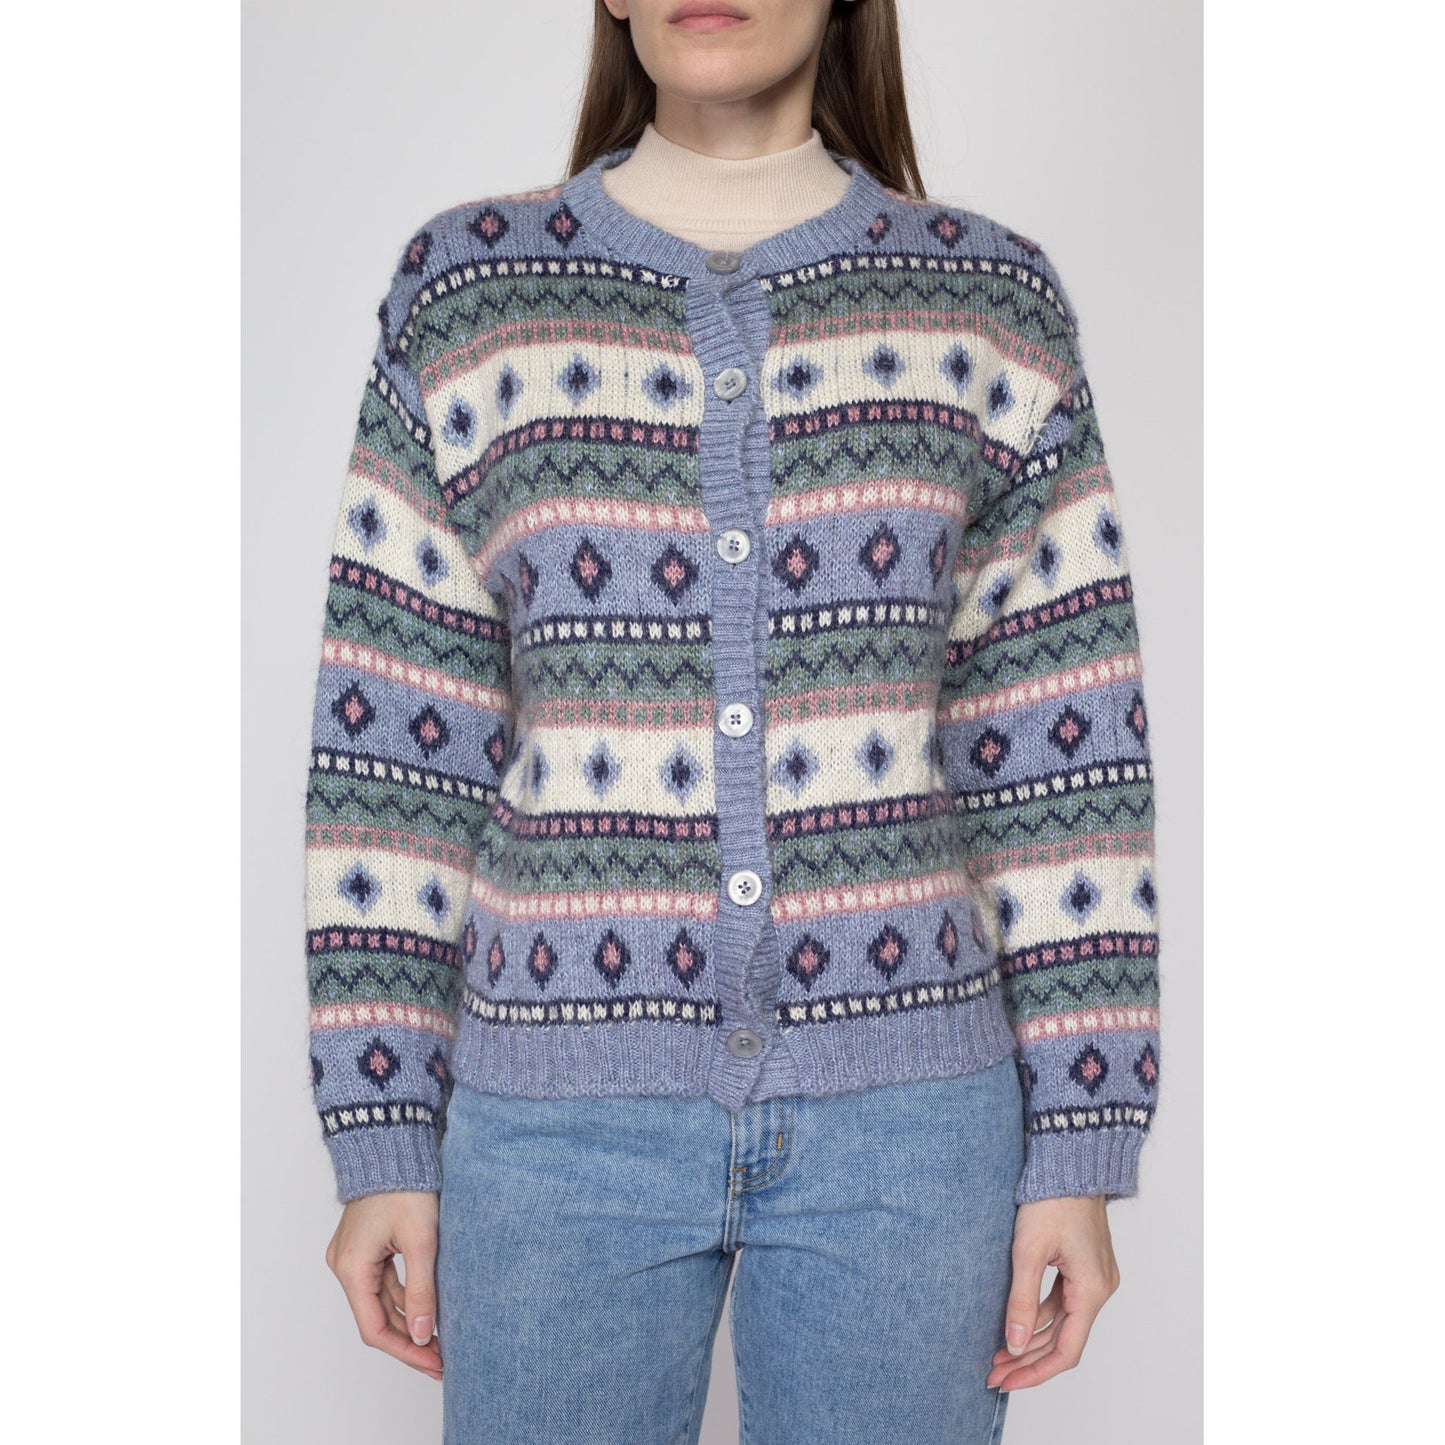 Medium 90s LL Bean Pastel Fair Isle Cardigan | Vintage Mohair Blend Button Up Striped Knit Sweater